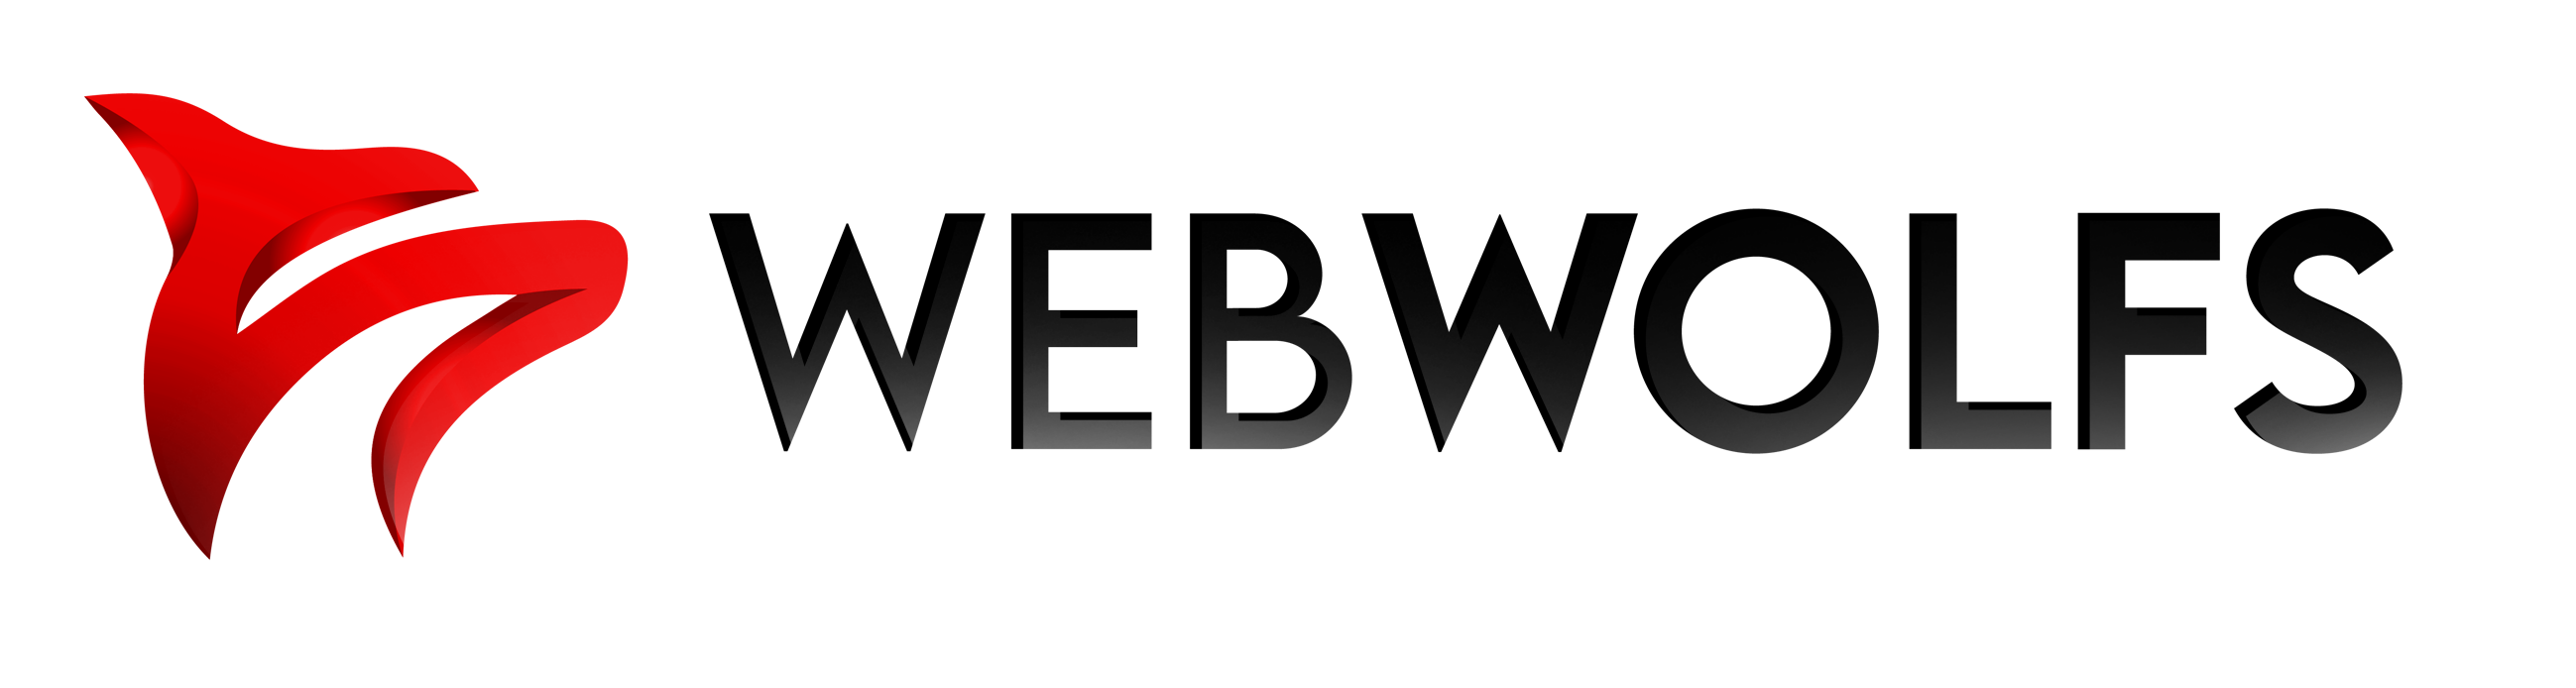 webwolfs logo